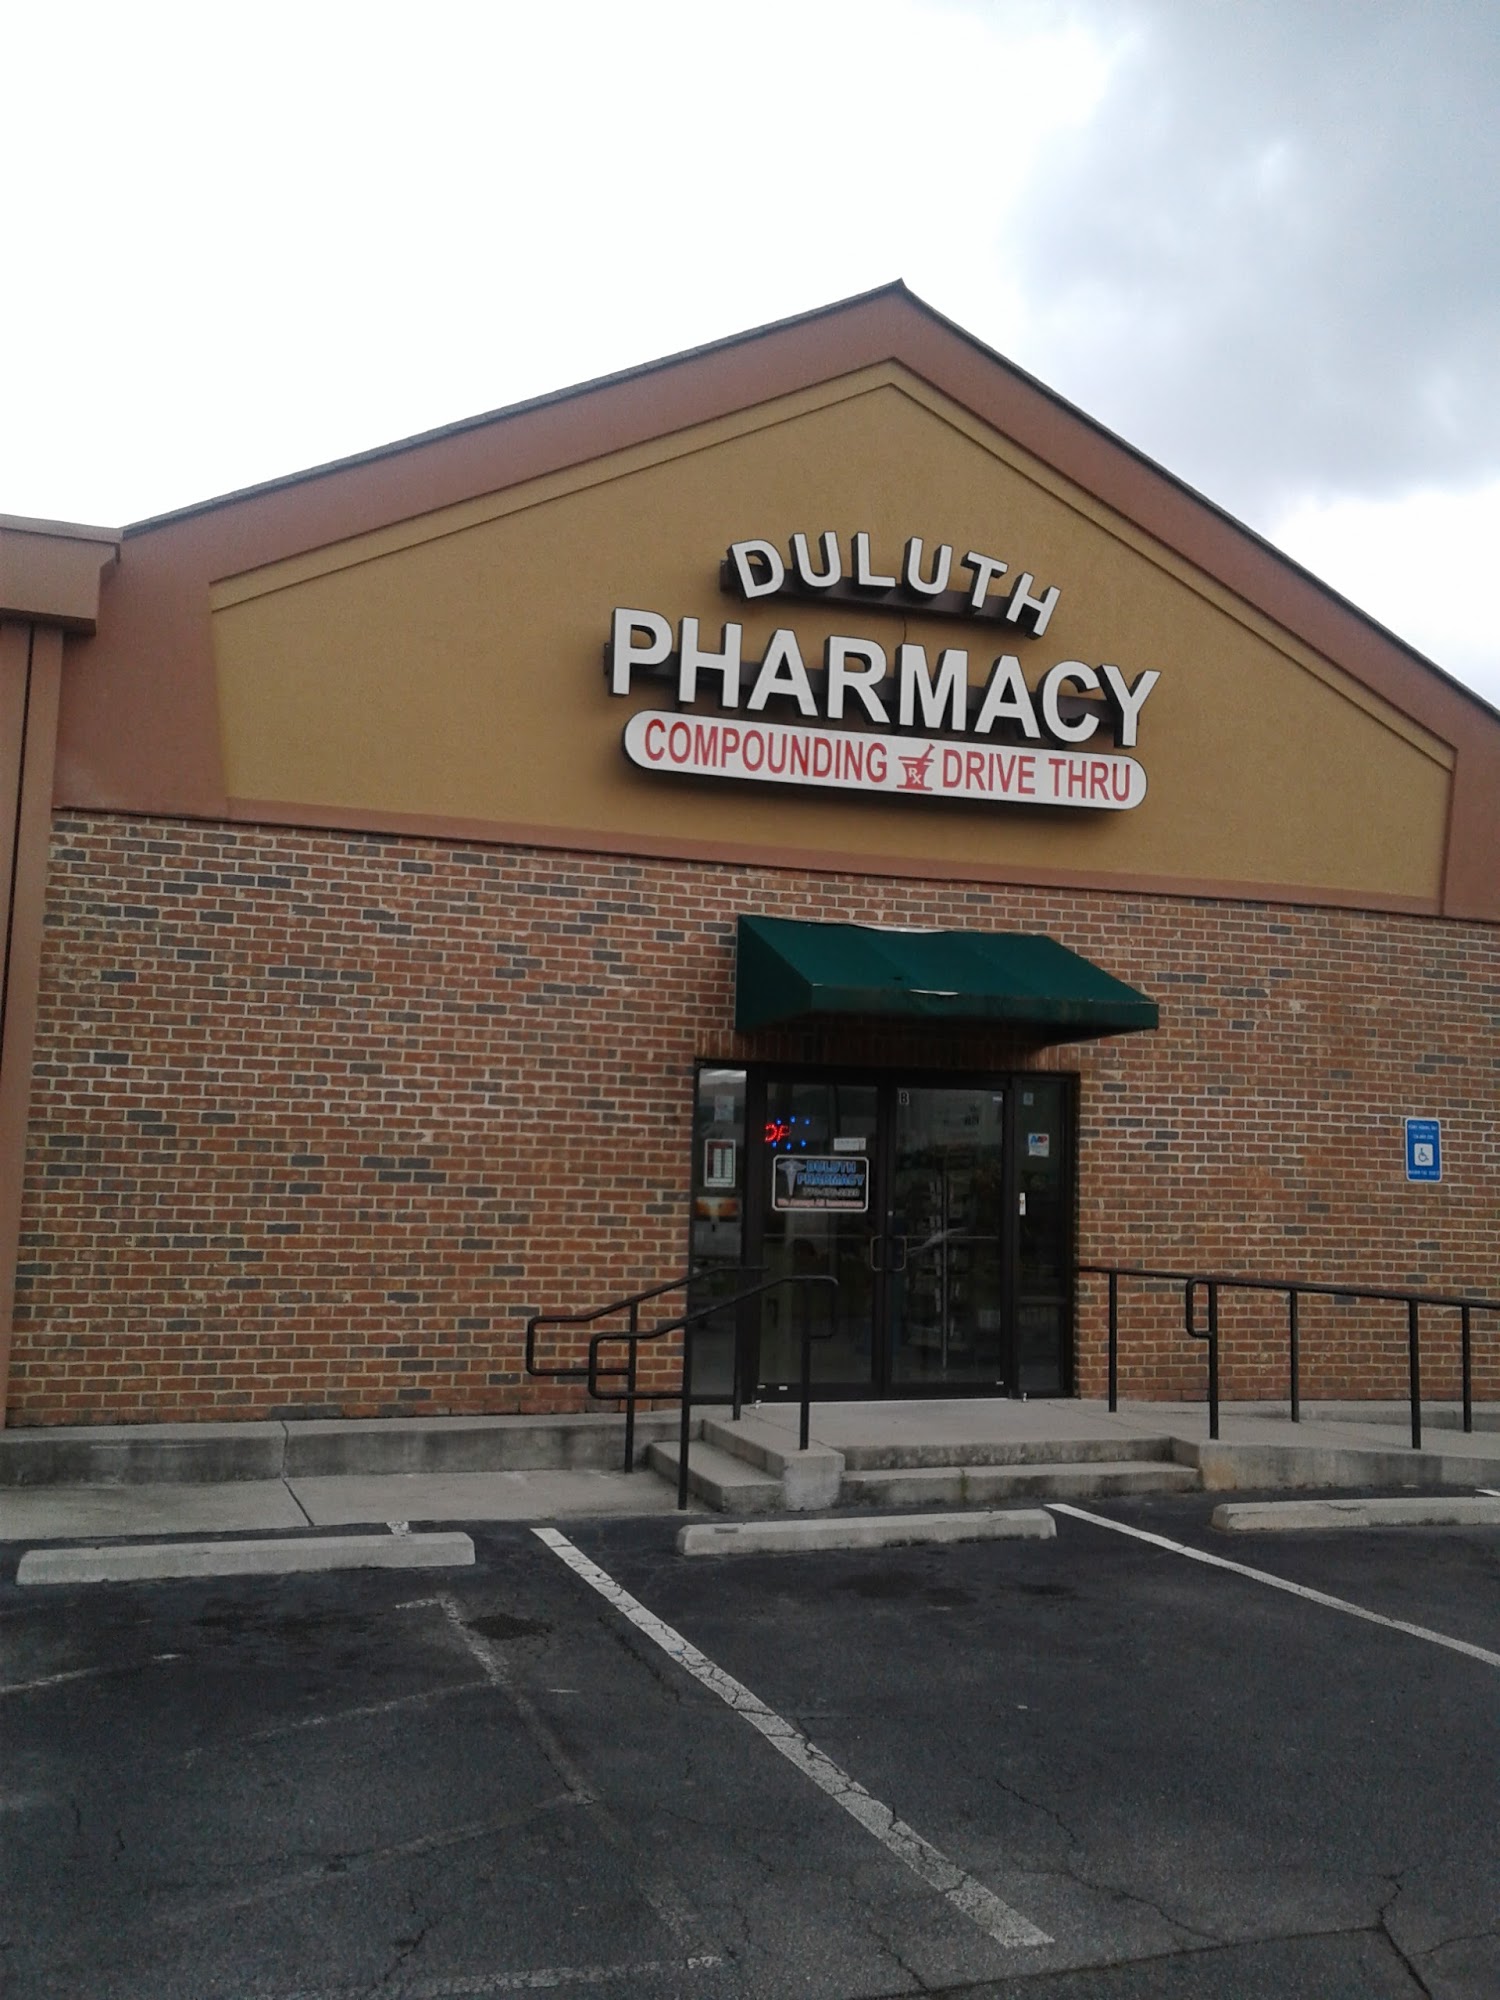 Duluth pharmacy